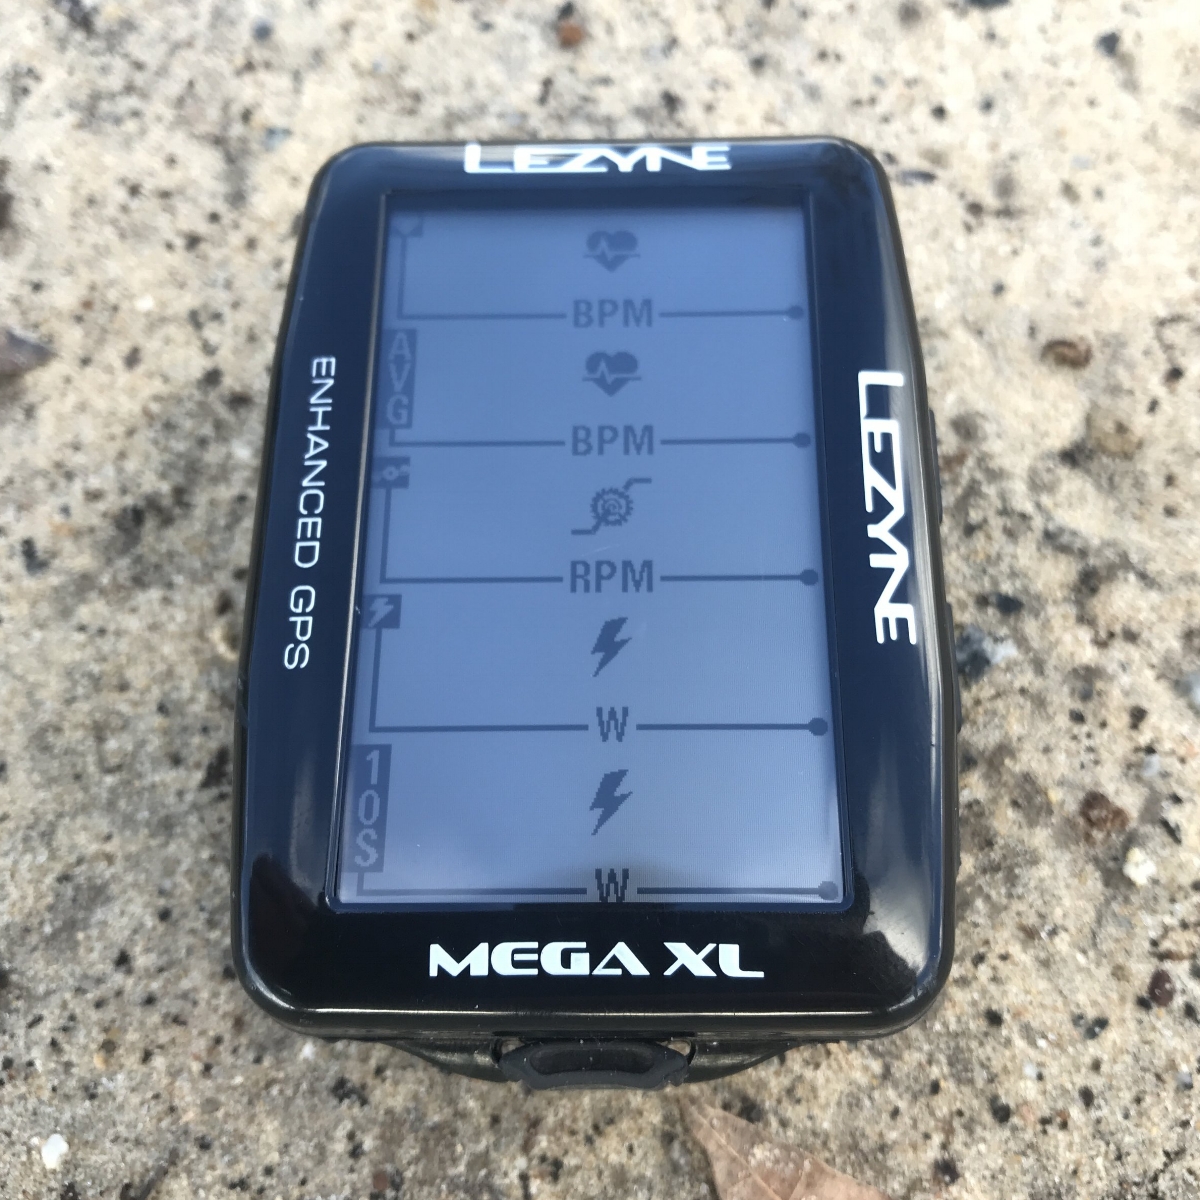  Lezyne Mega XL GPS cycling computer 